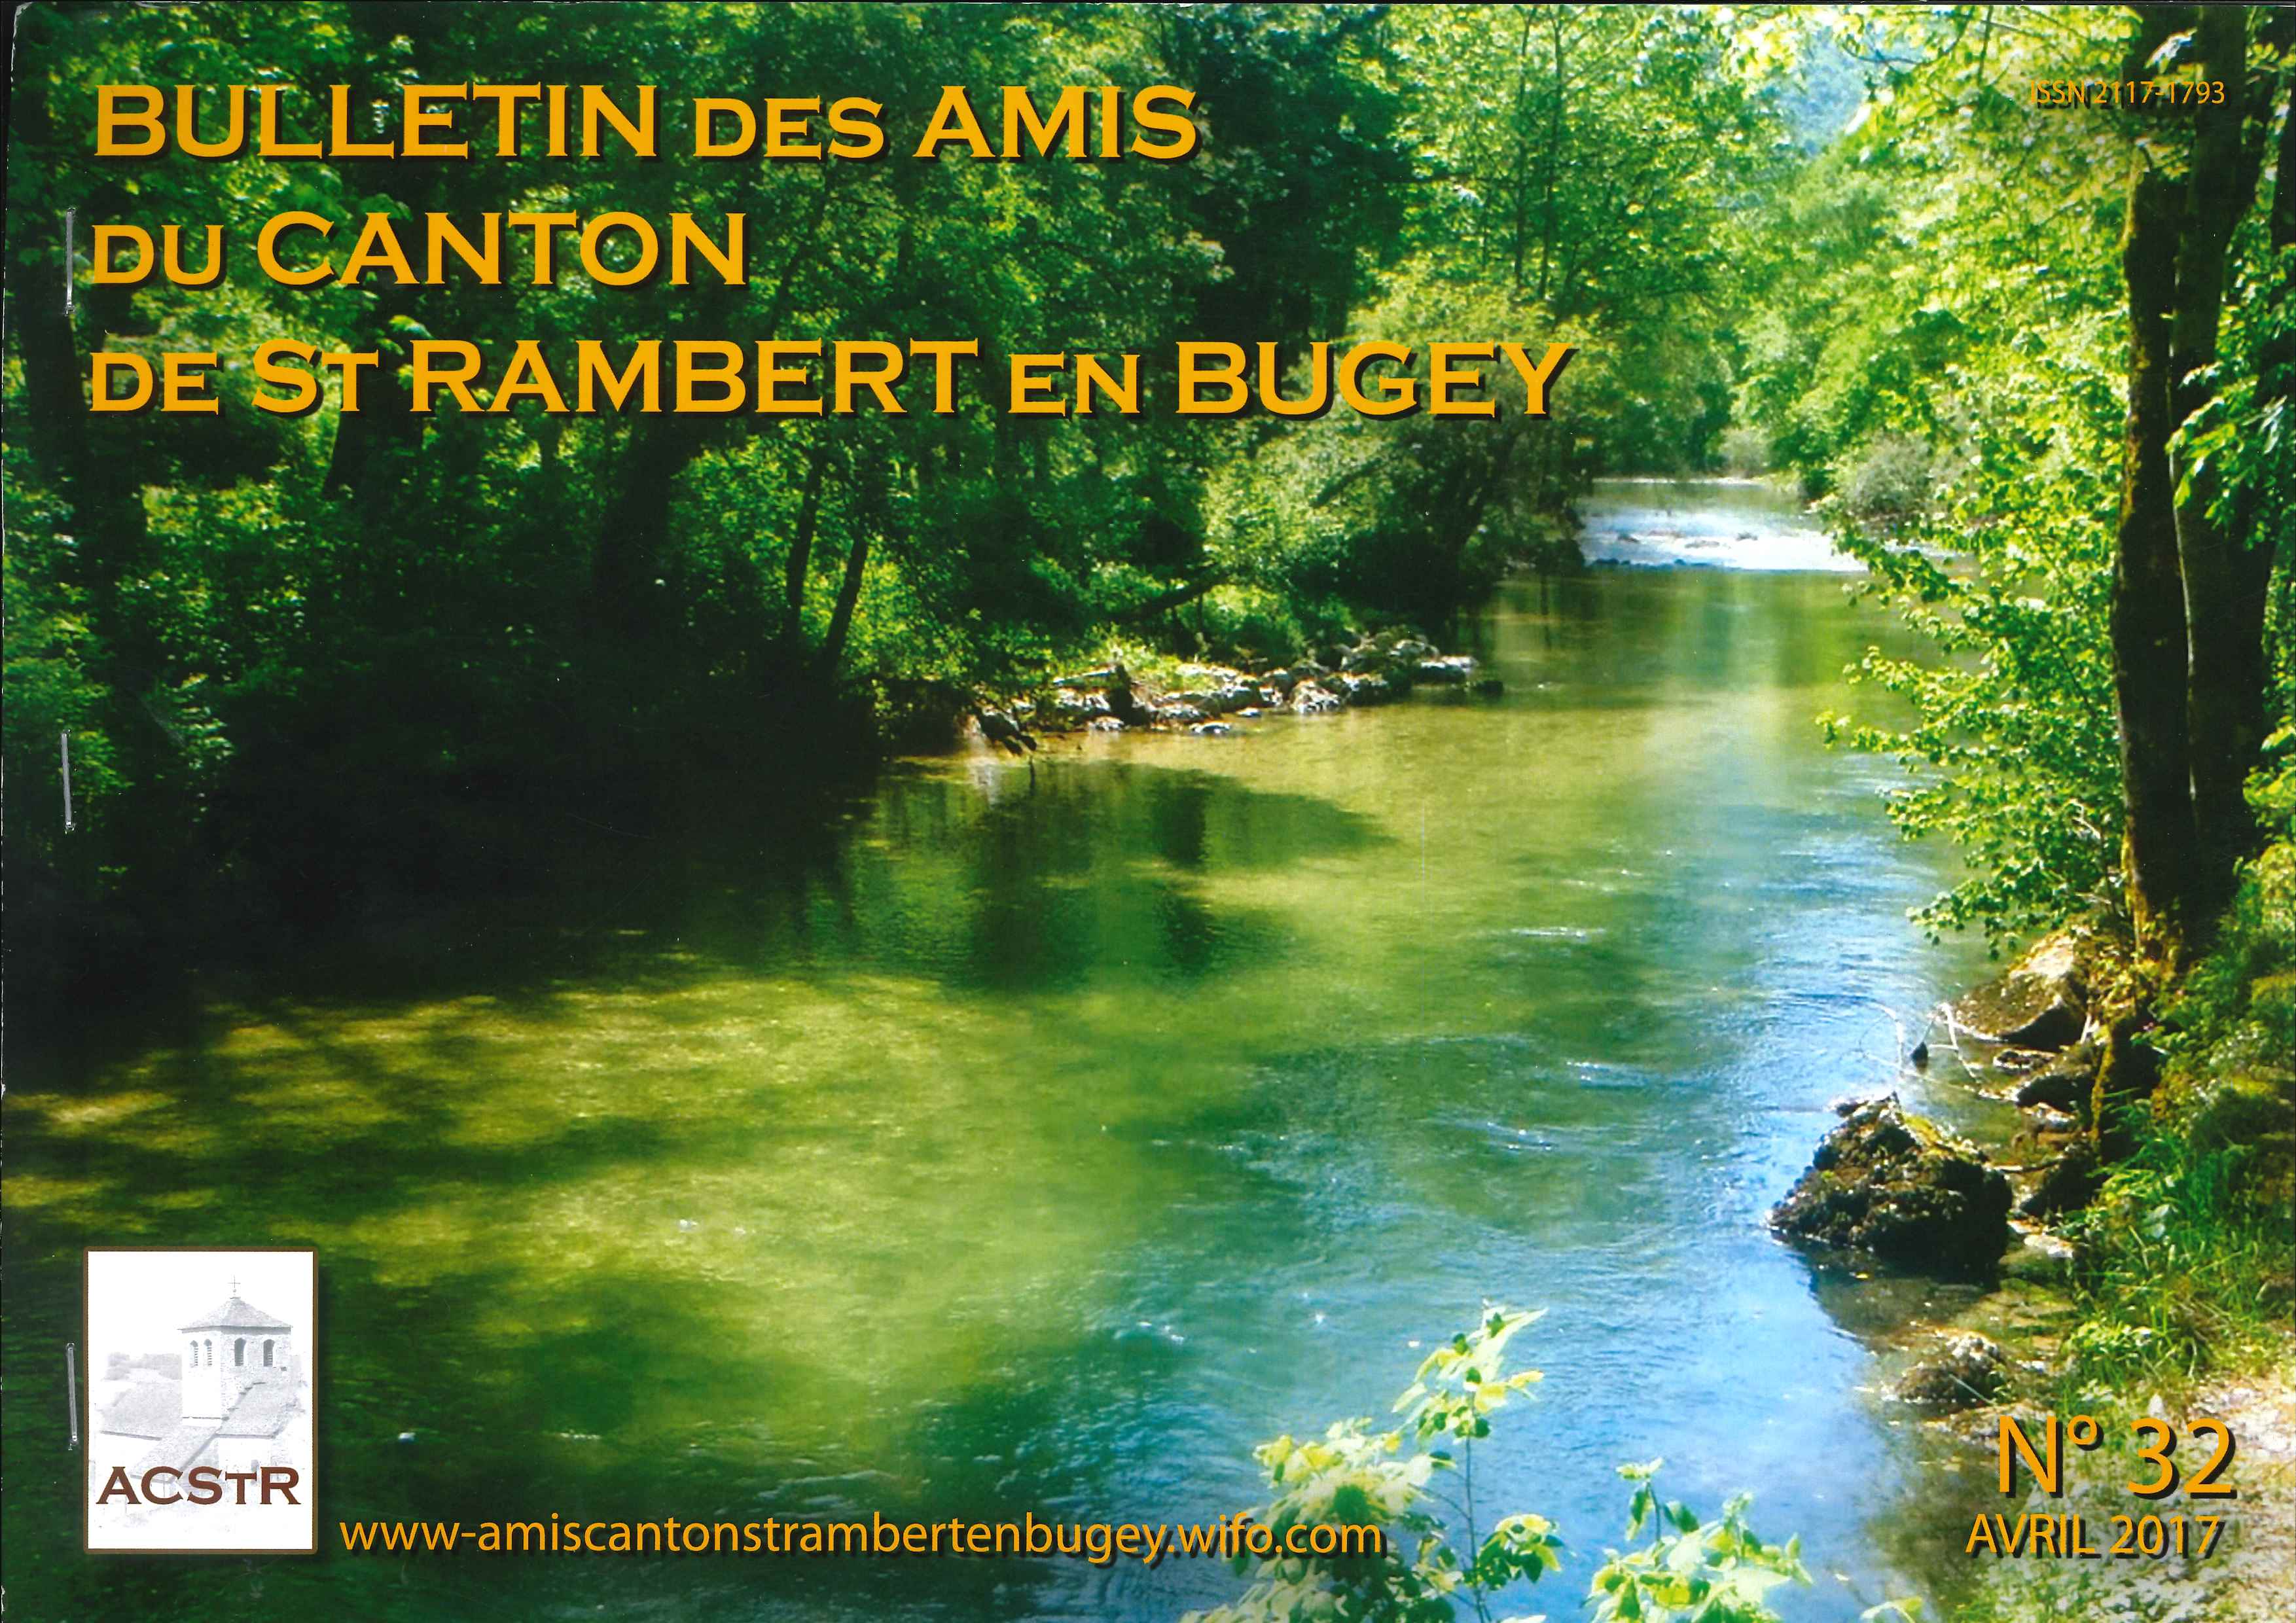 Bulletin des amis du canton de Saint Rambert en Bugey n32